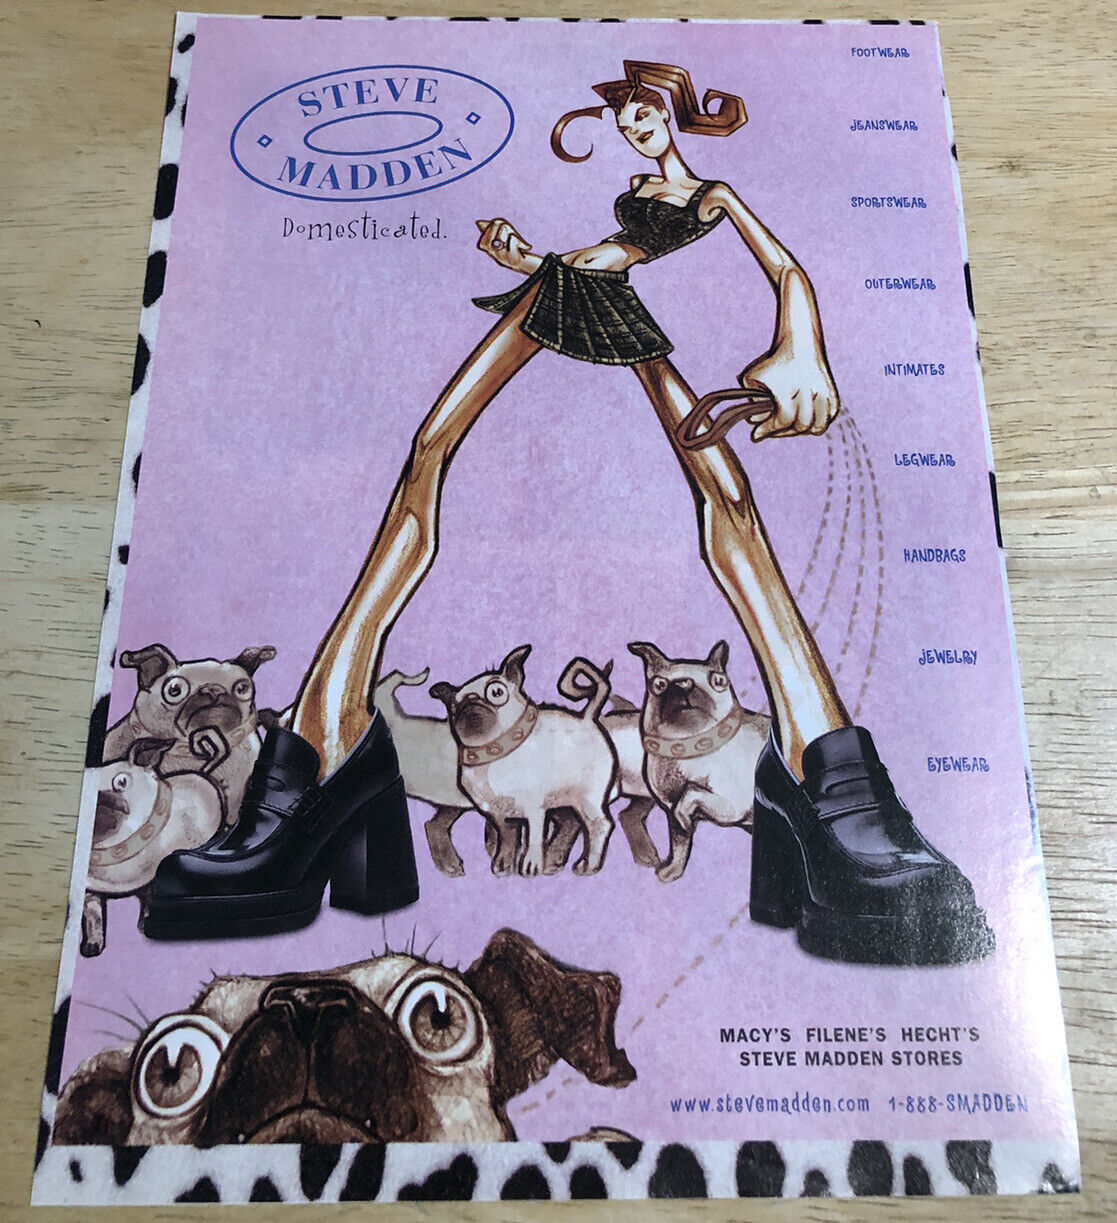 1998 STEVE MADDEN Ad - Vintage Full Page Magazine Print Ad